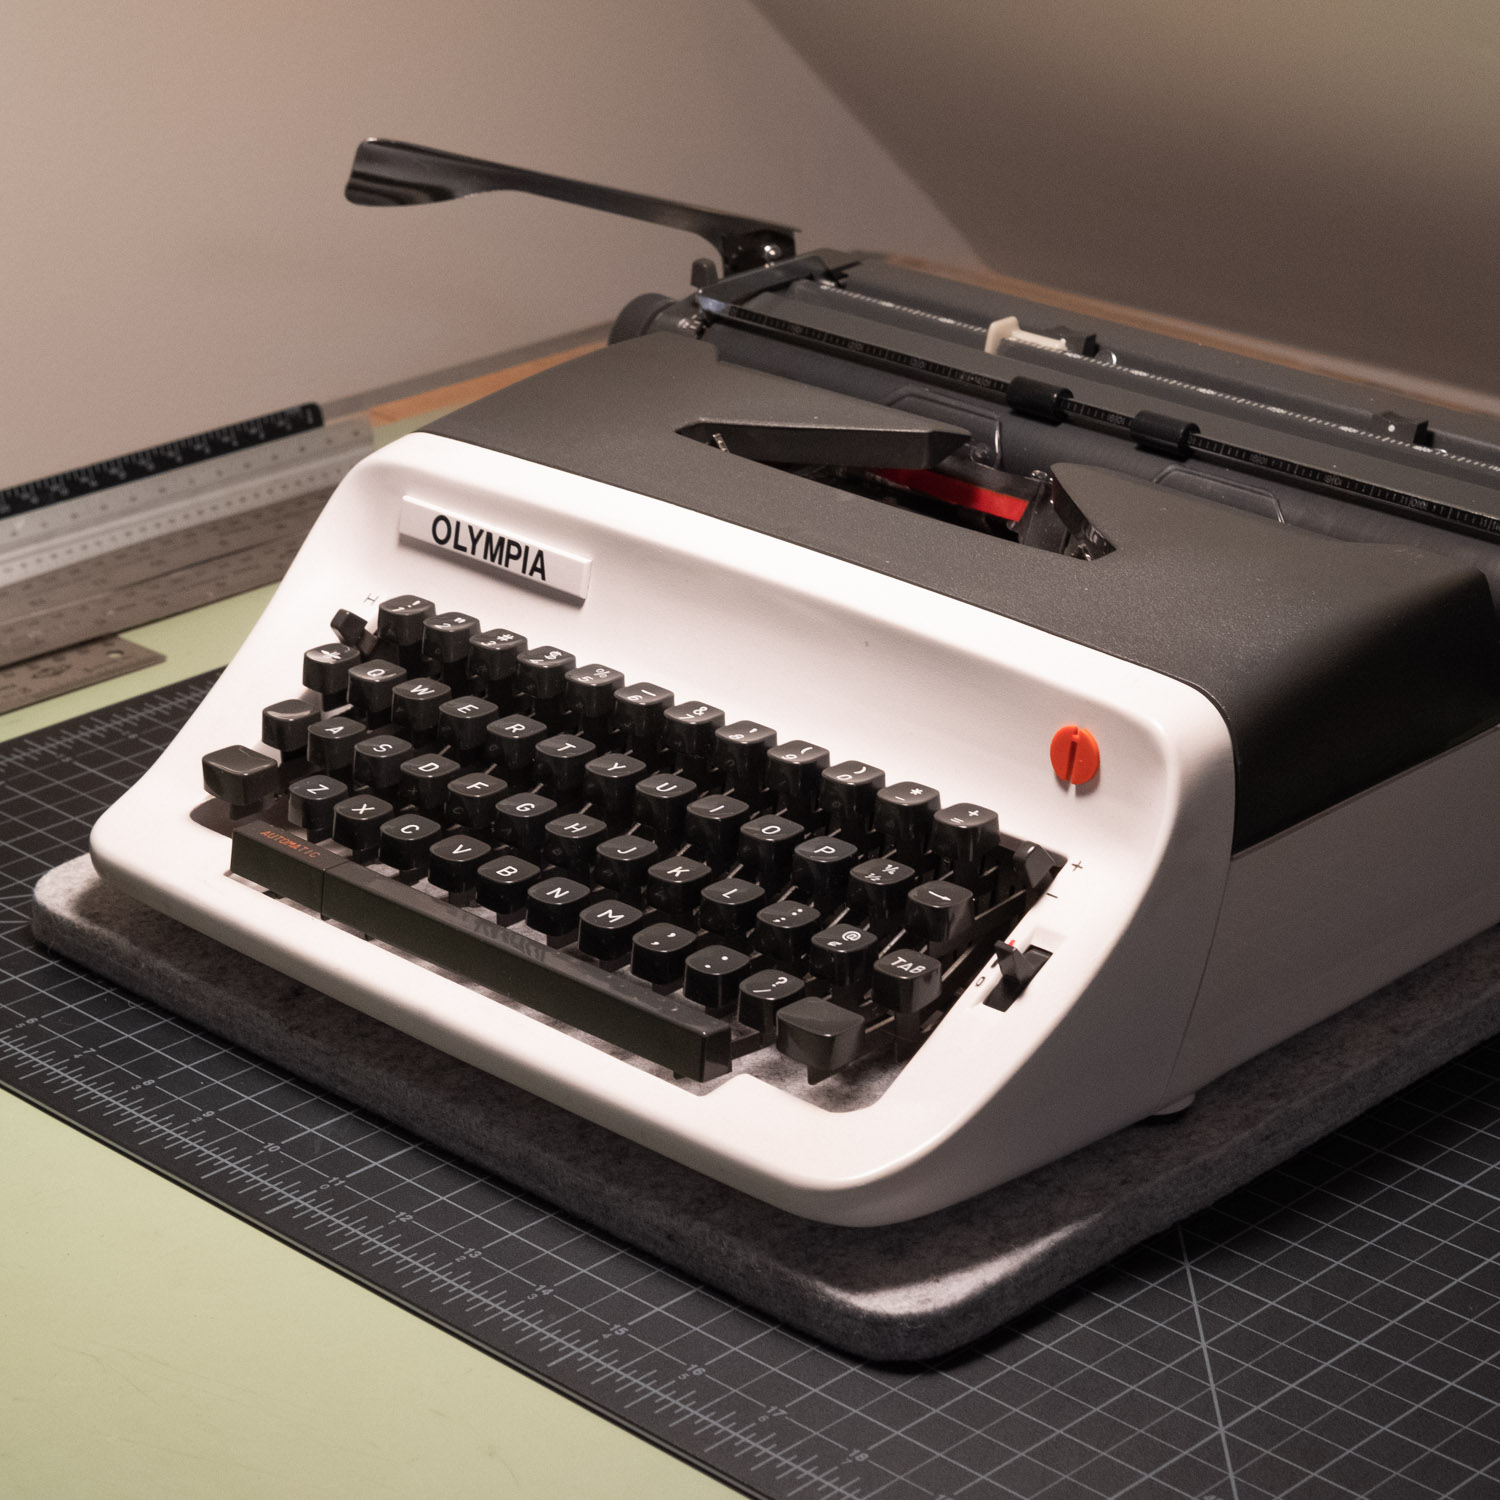 Olympia B12 typewriter on drafting table